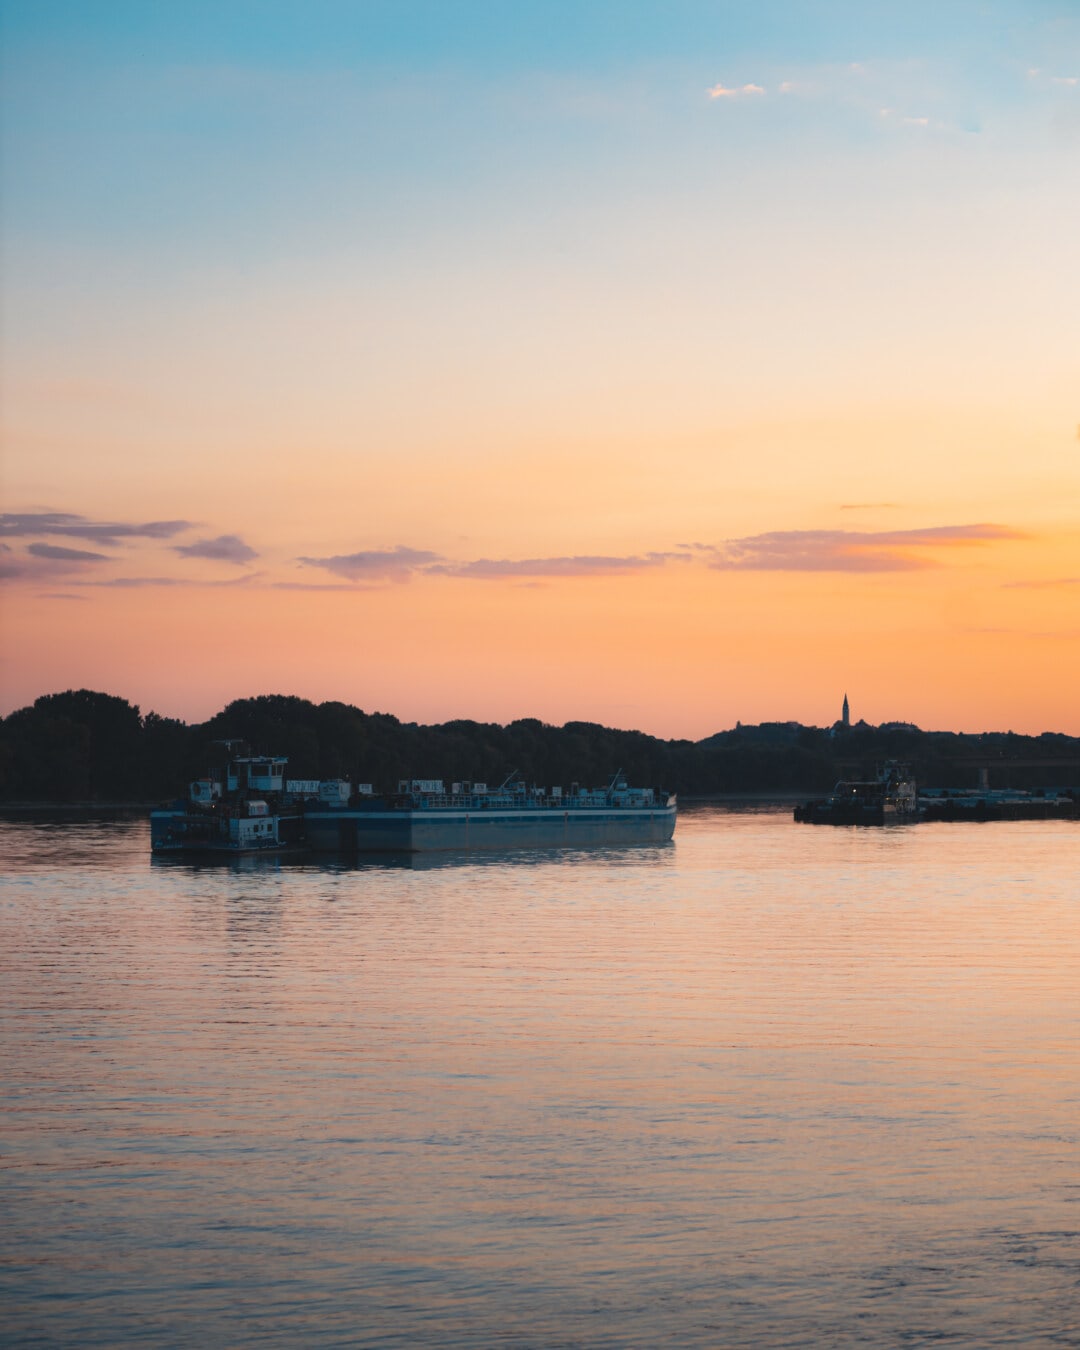 shipping, sunset, ship, barge, dawn, landscape, water, lake, reflection, dusk